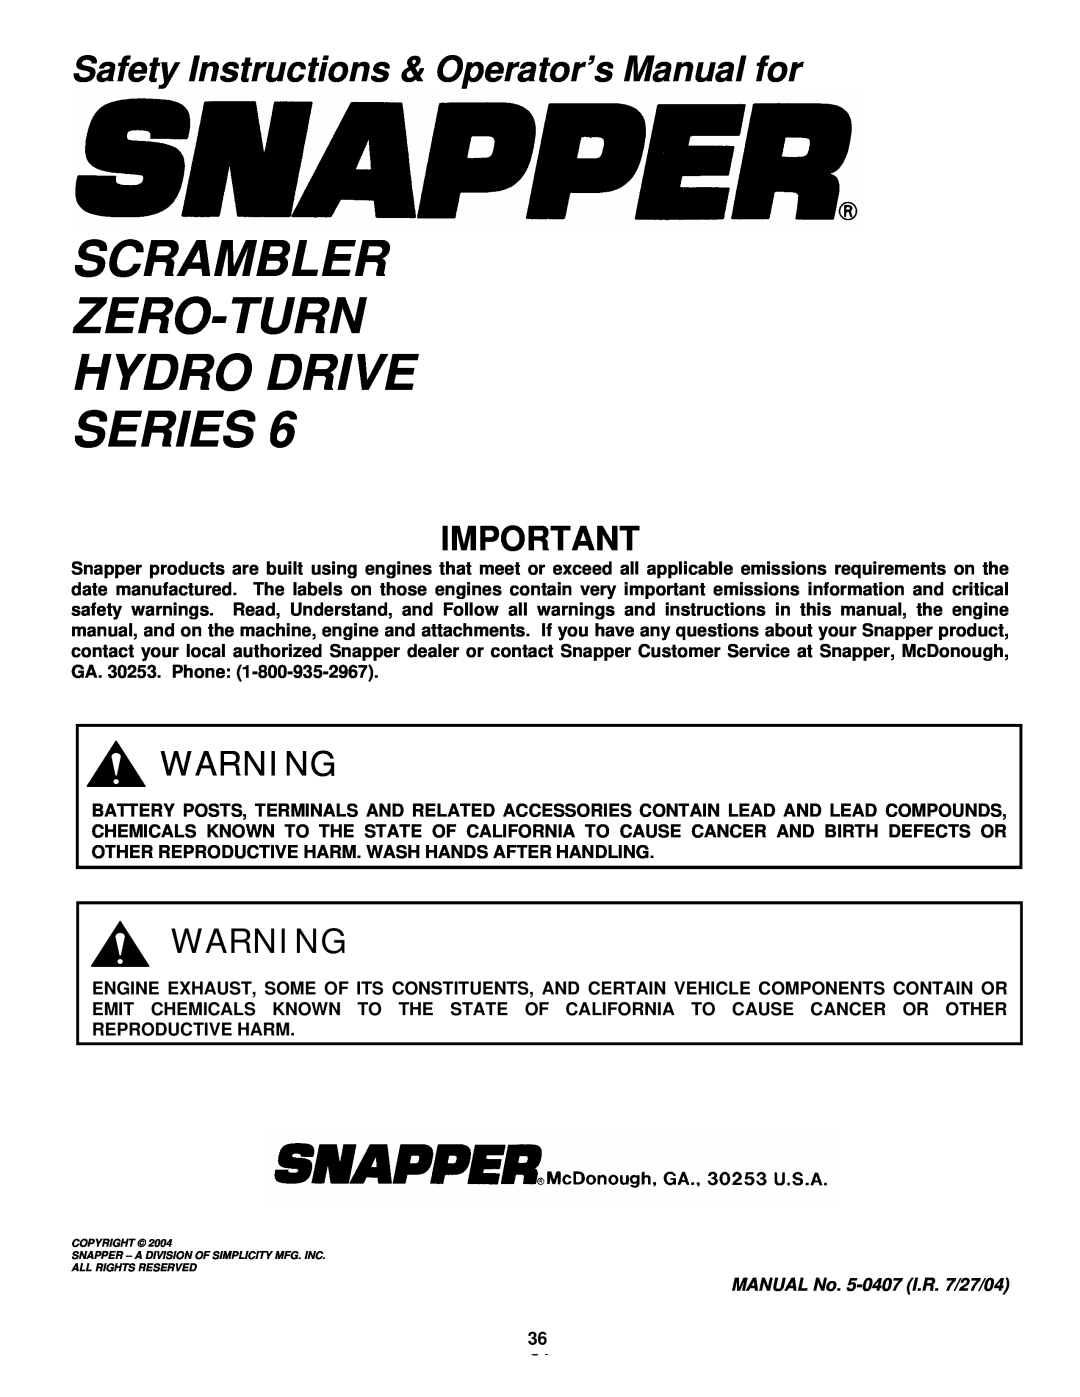 Snapper SZT18386BVE, SZT18336BVE Scrambler Zero-Turn Hydro Drive Series, Safety Instructions & Operator’s Manual for 